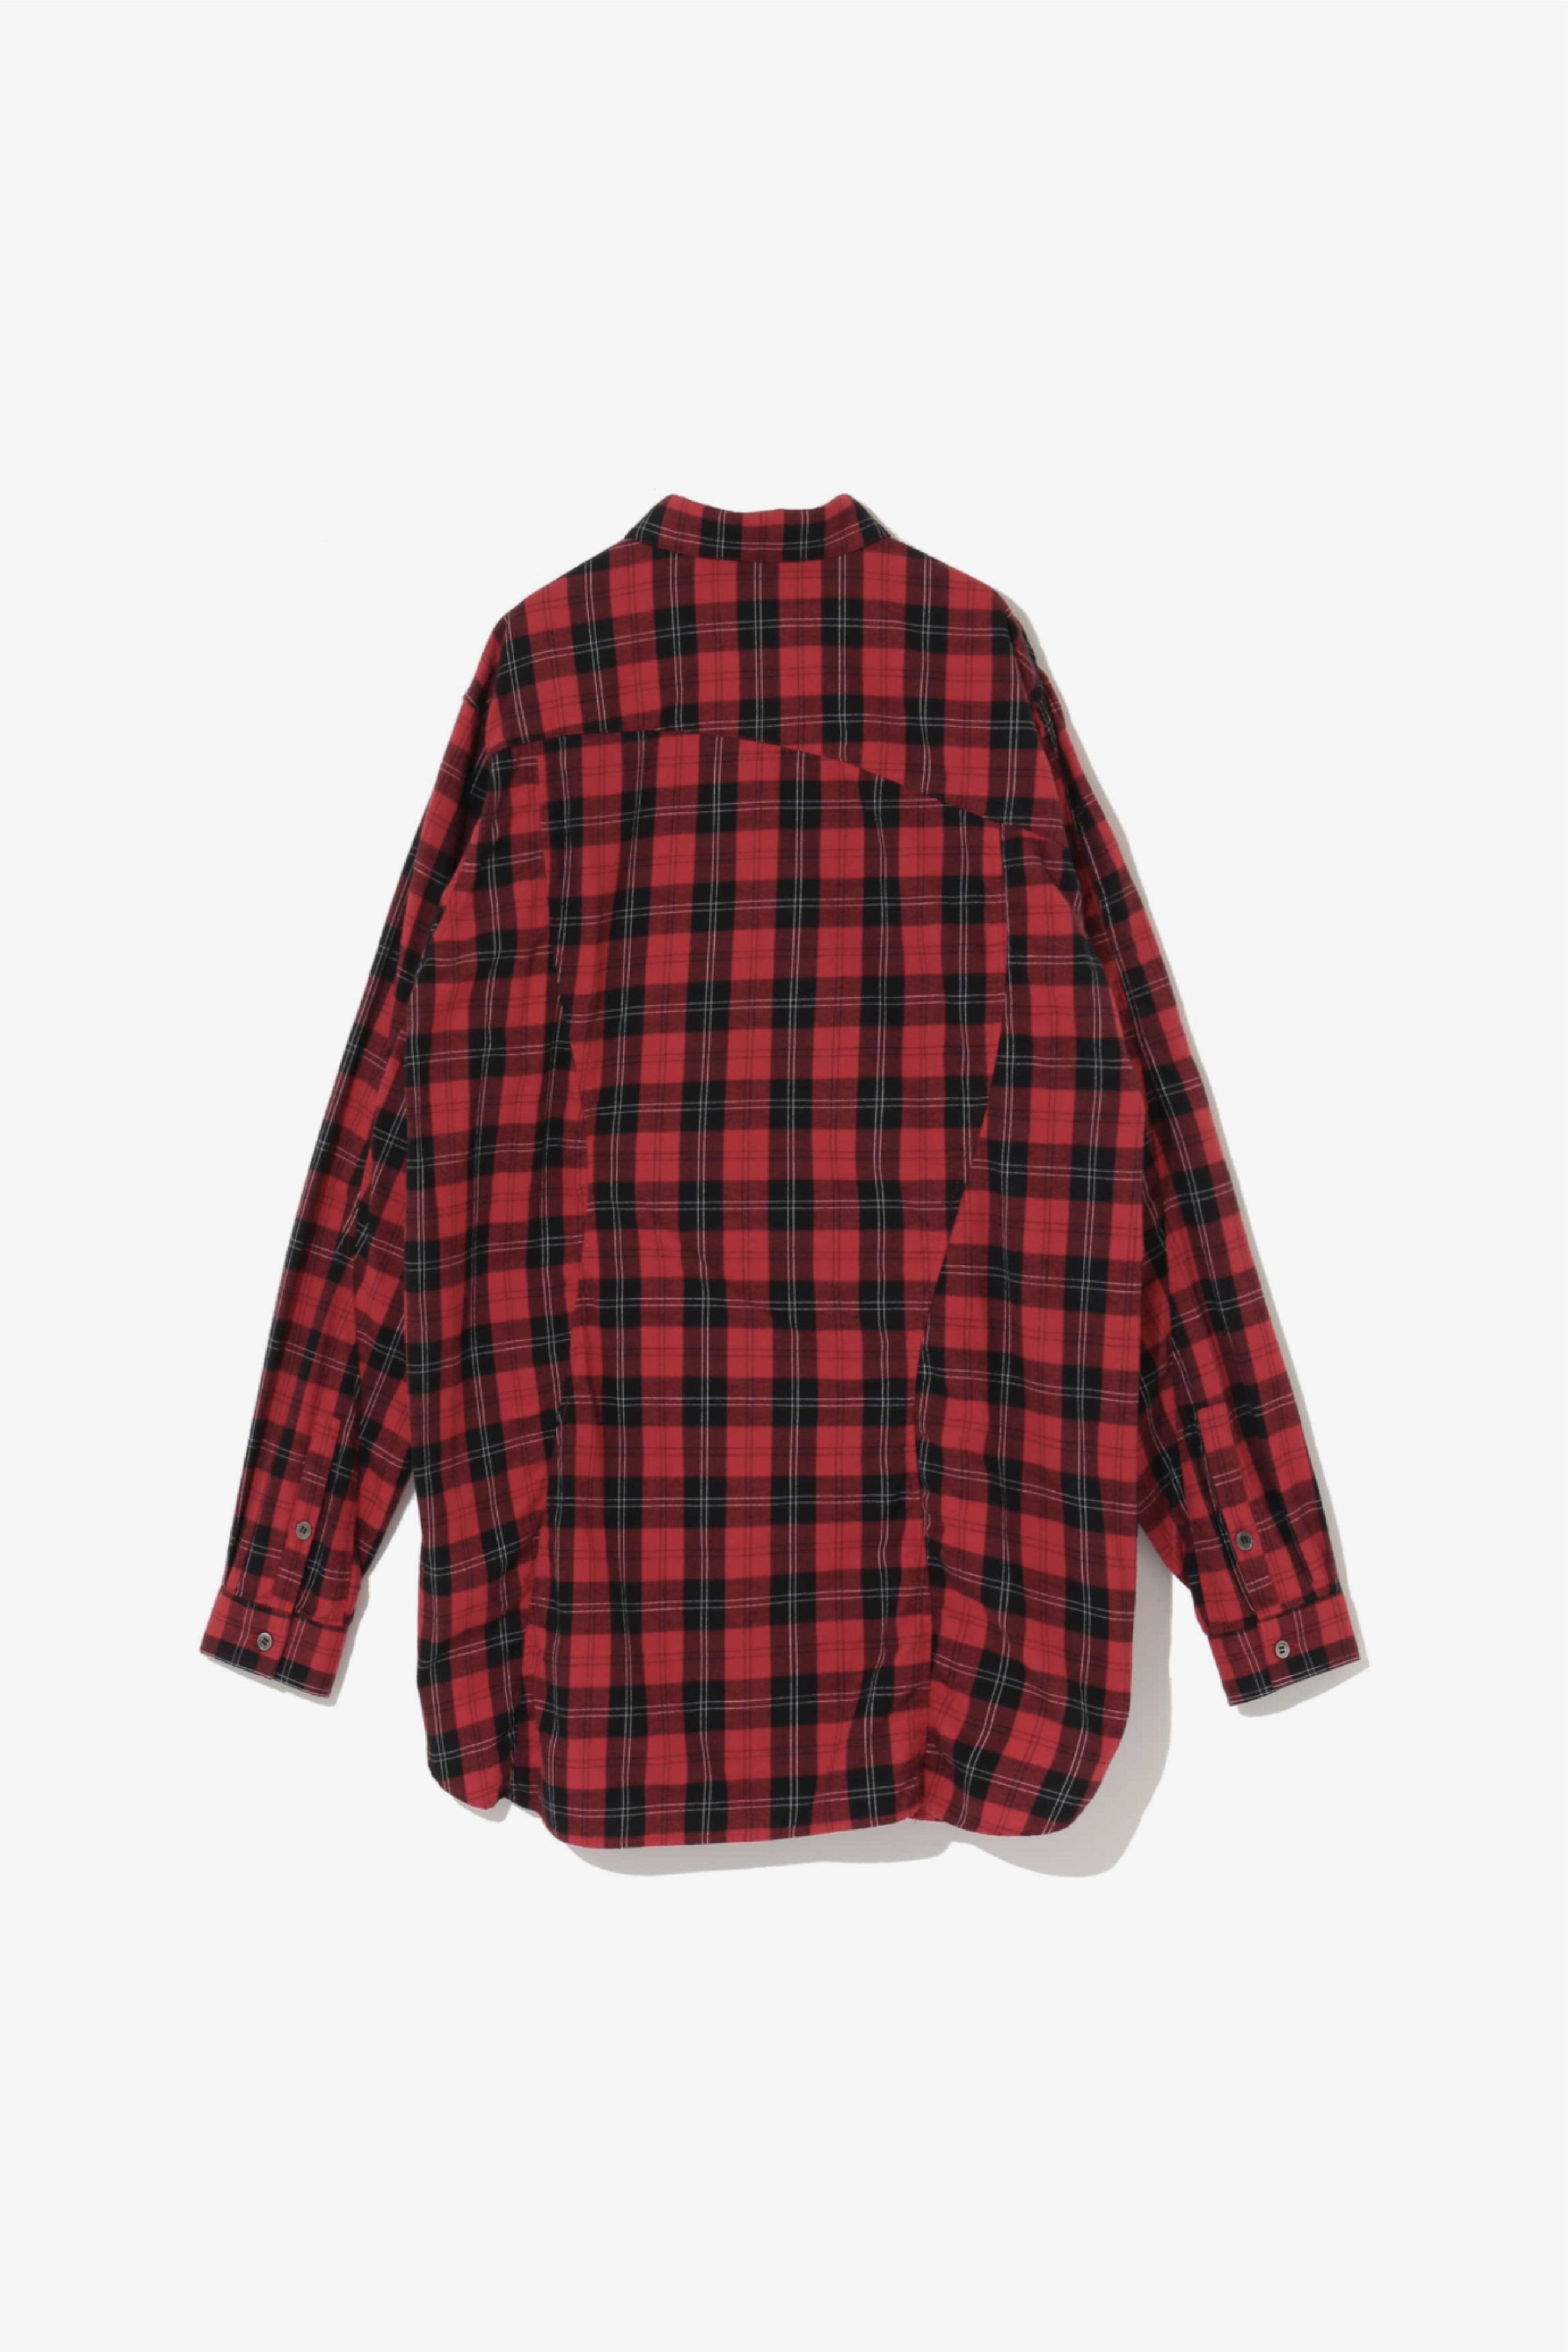 Selectshop FRAME - UNDERCOVERISM Long Check Shirt Shirt Dubai